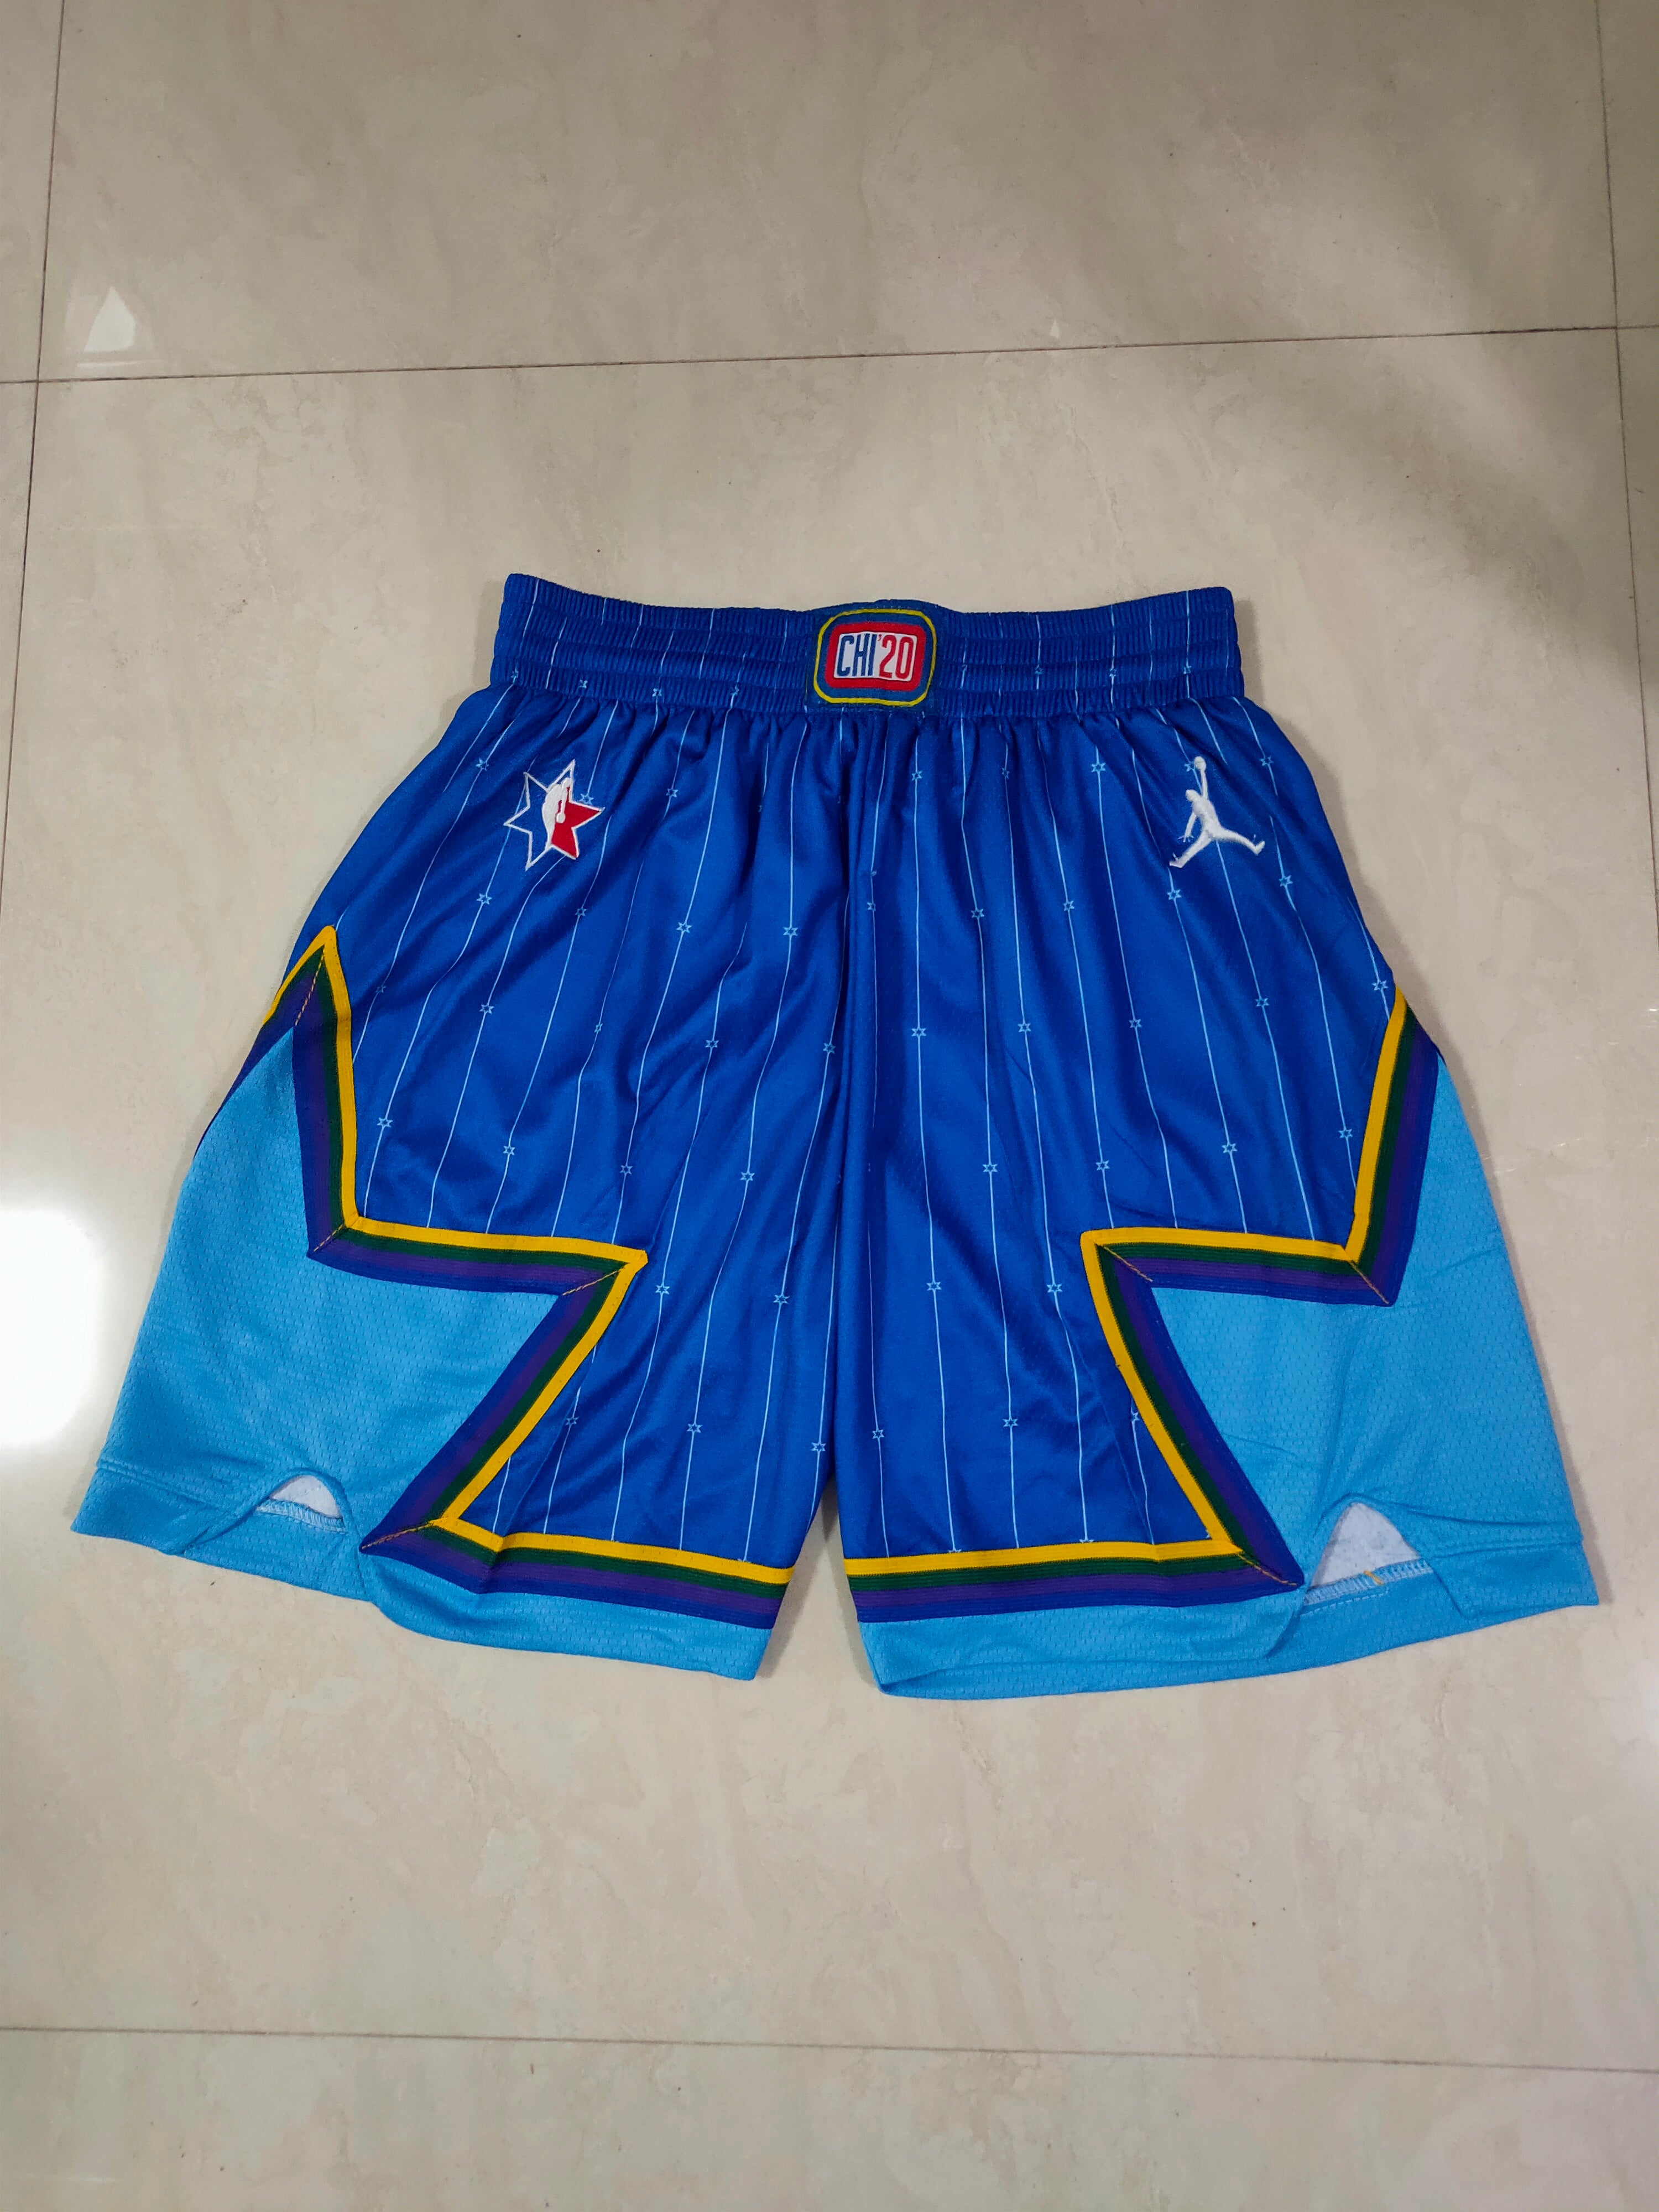 Jordan blue/royal blue shorts